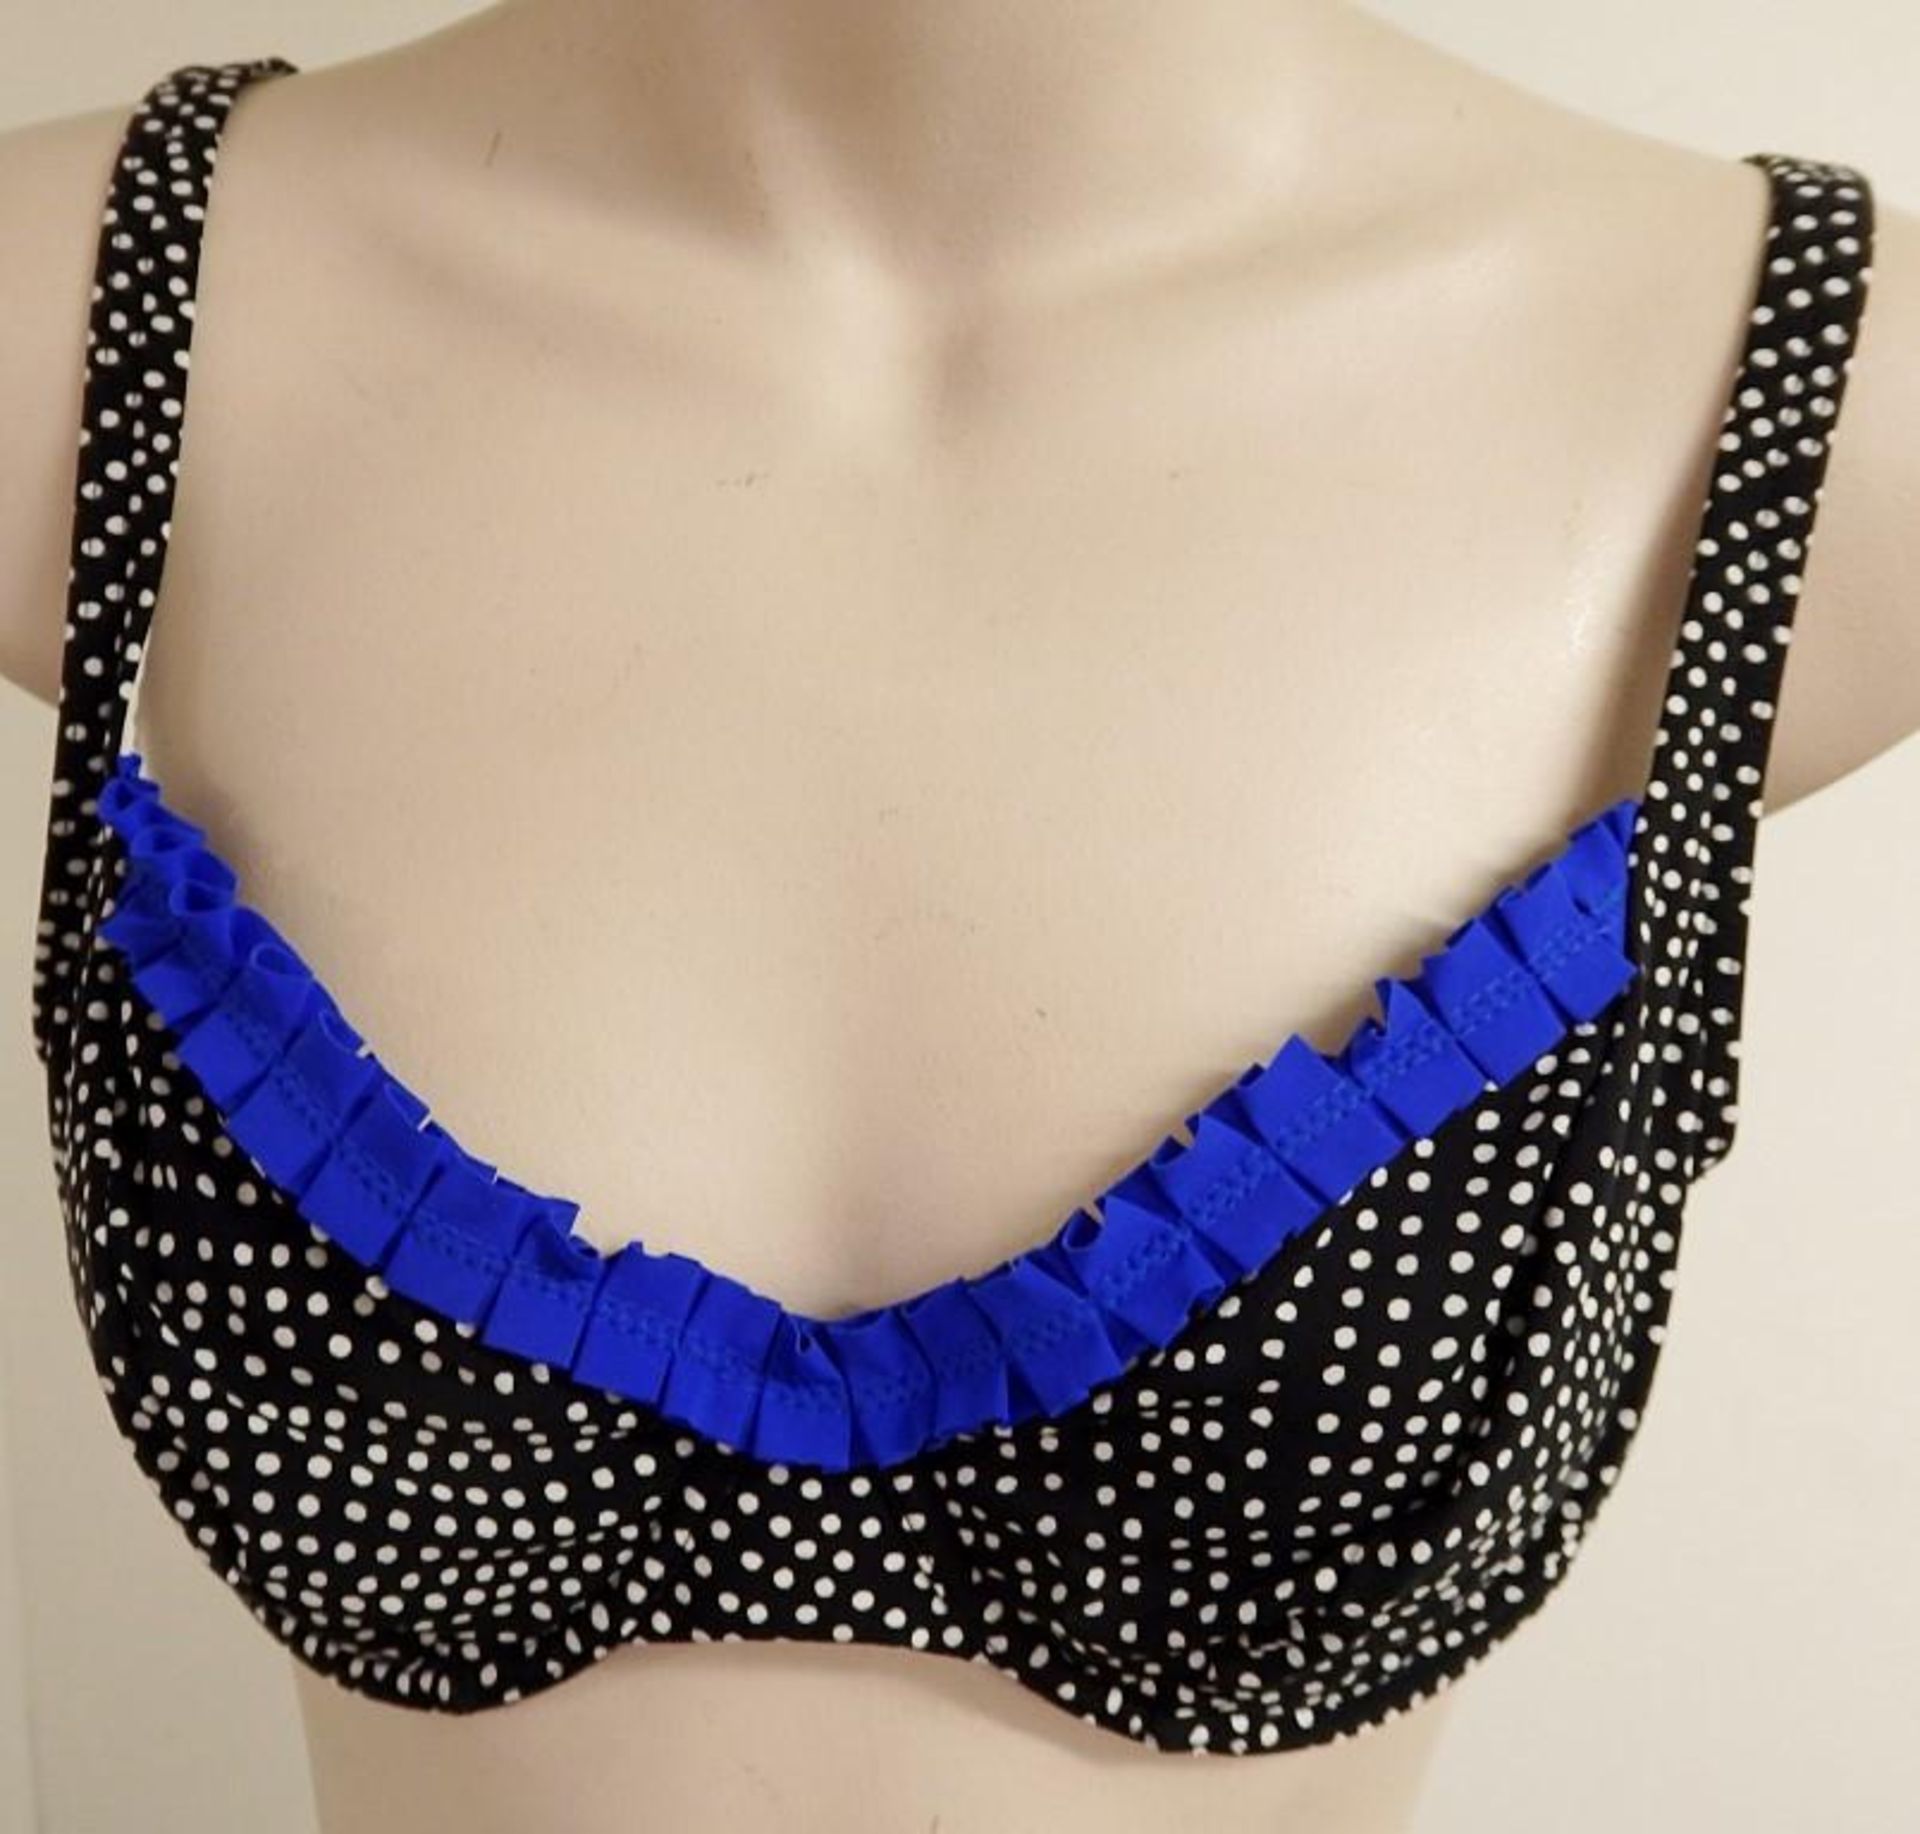 1 x Rasurel - Black Polka dot with royal blue trim &frill Tobago Bikini - B21068 - Size 2C - UK 32 - - Image 2 of 10